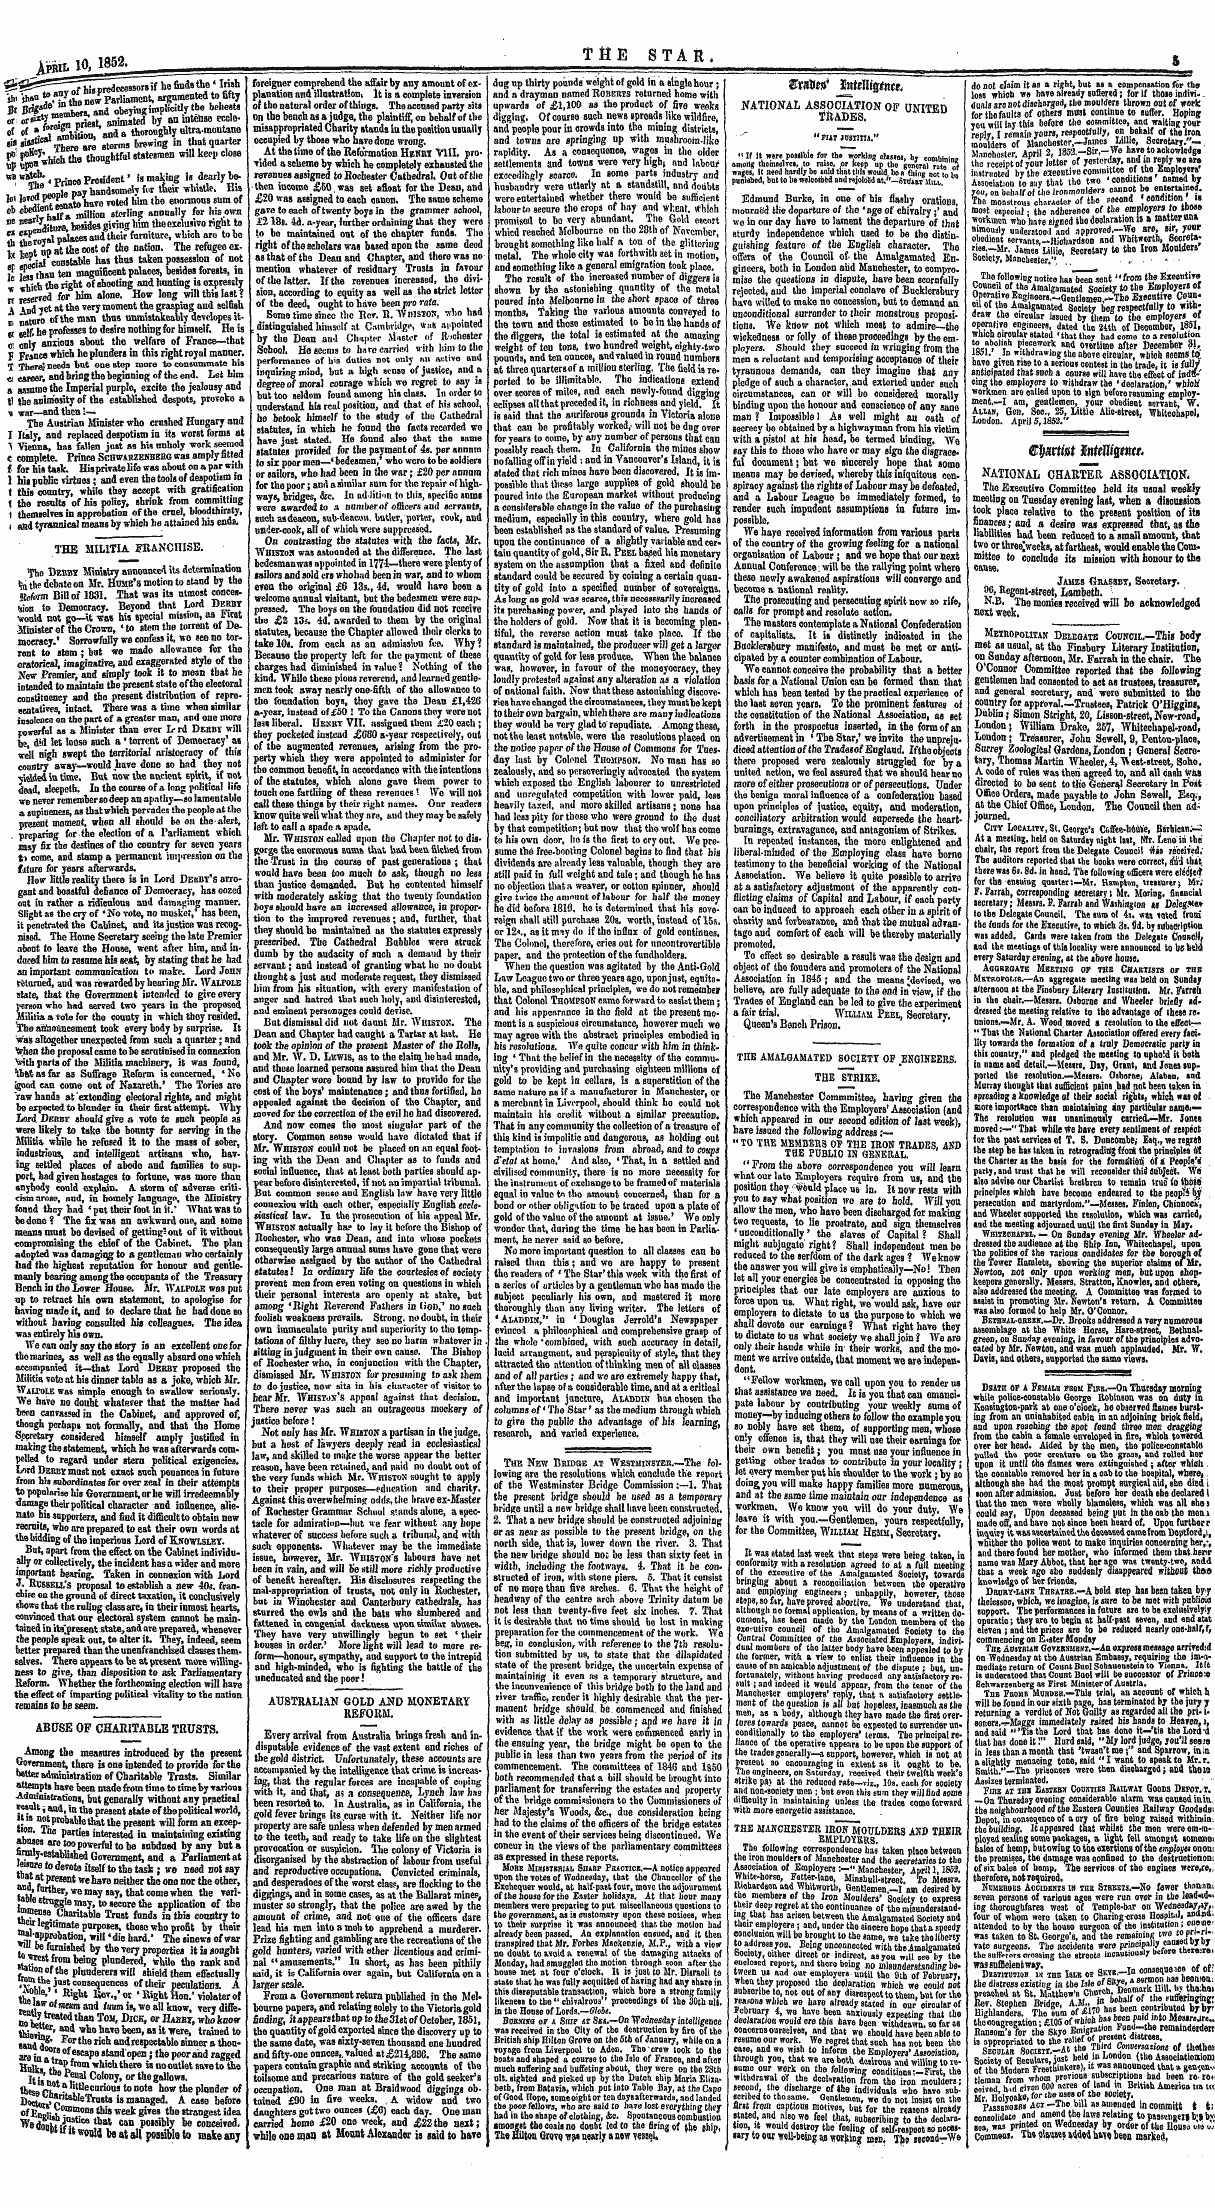 Northern Star (1837-1852): jS F Y, 2nd edition - April 10, 1852. T Tt E Sta ^* M . ' S